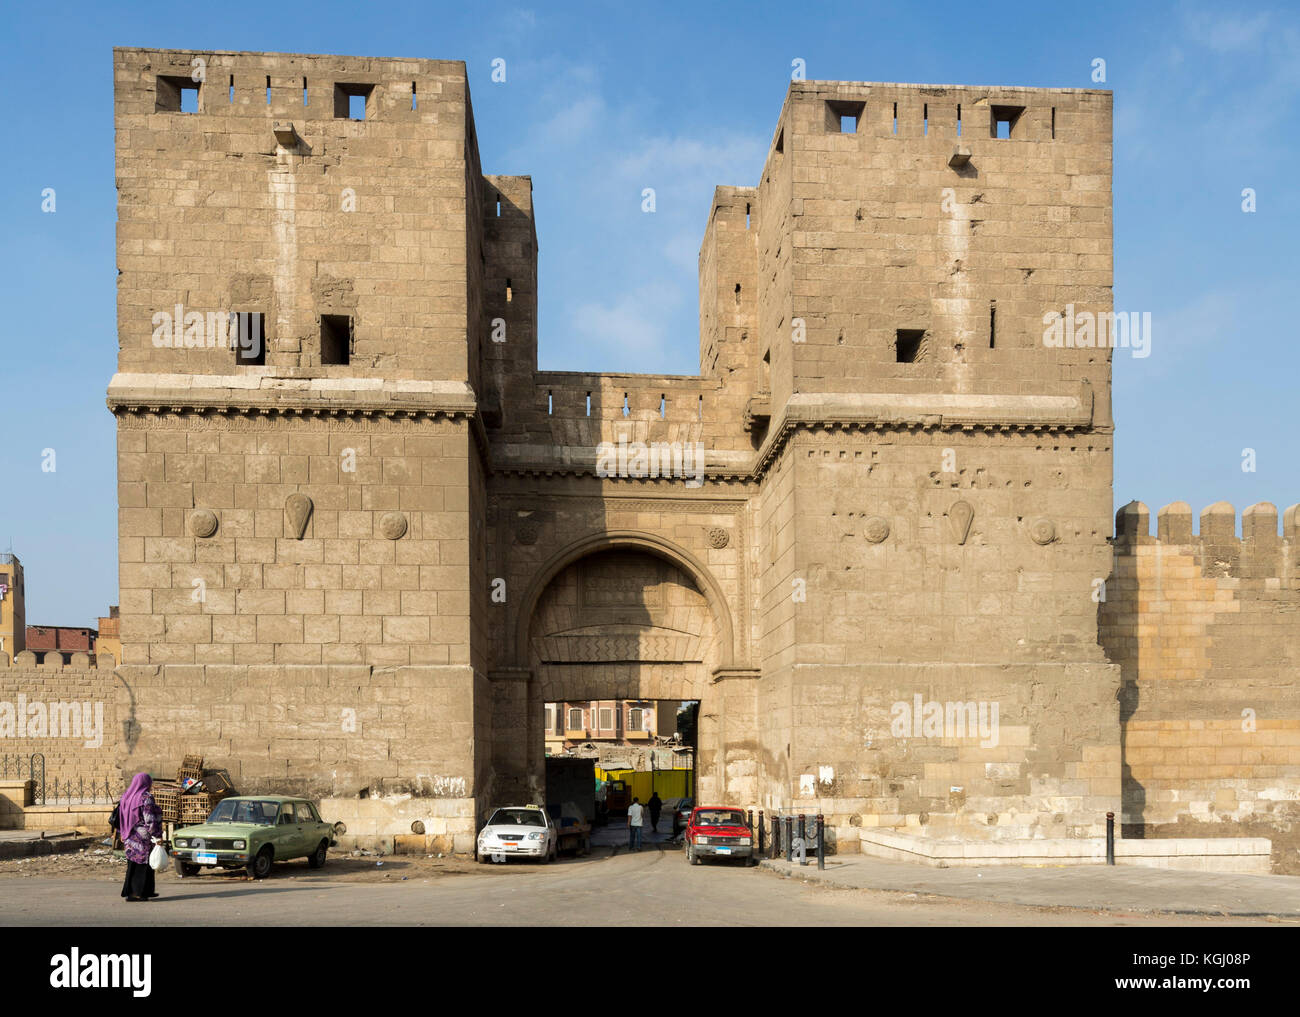 Bab al-Nasr, Cairo, Egypt Stock Photo - Alamy